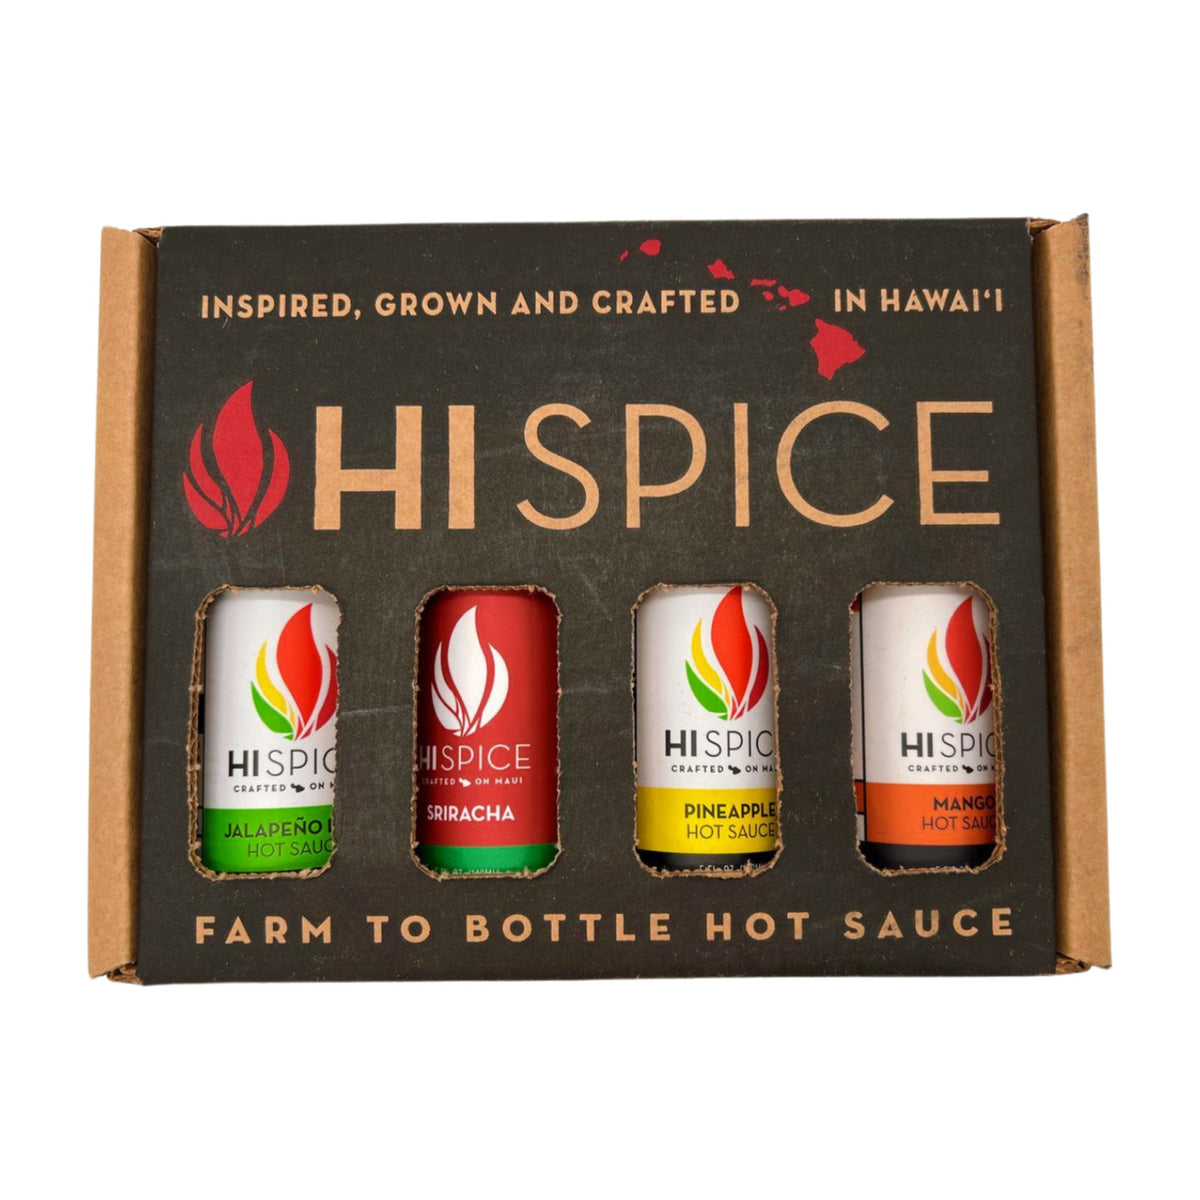 Pop-Up Mākeke - HI Spice - 4 Pack Hot Sauce Gift Box - Front View